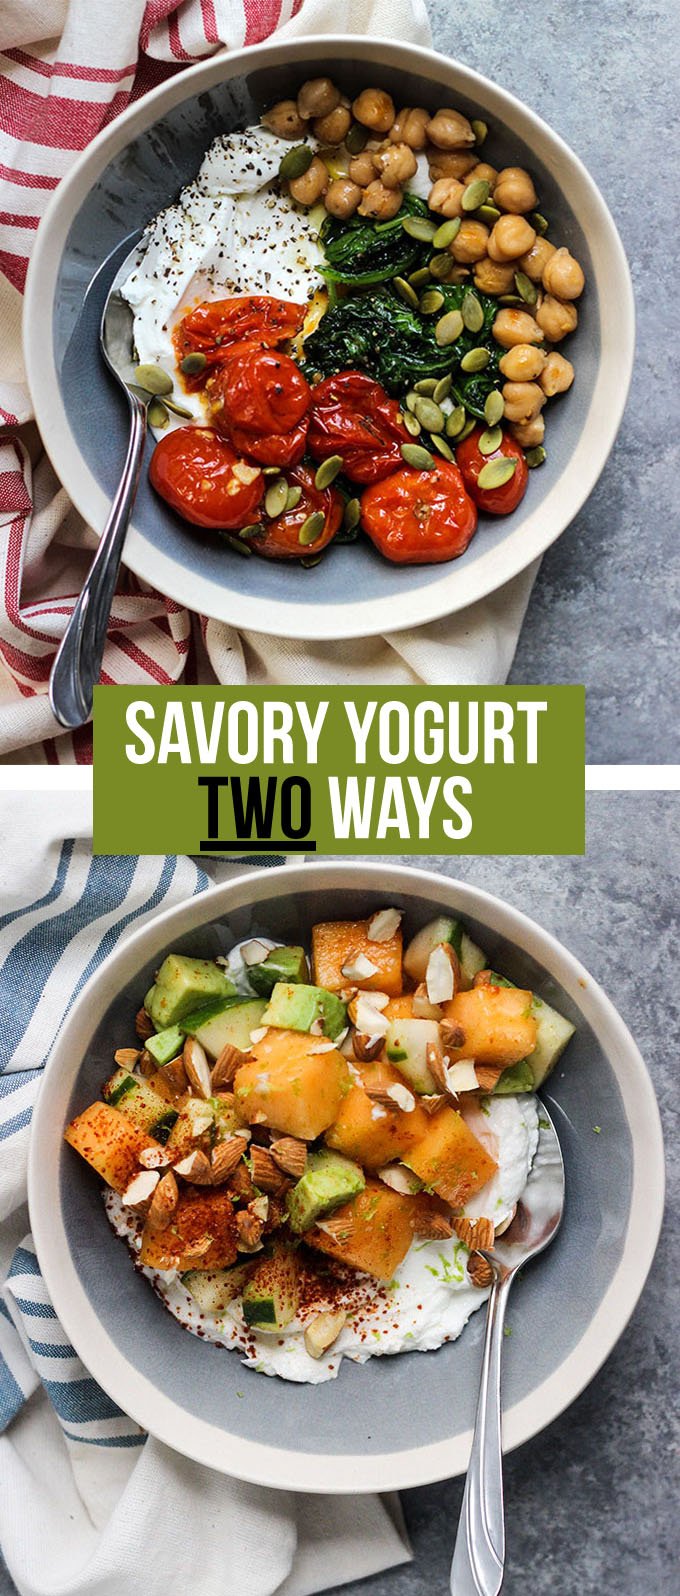 Savory Yogurt 2 Ways